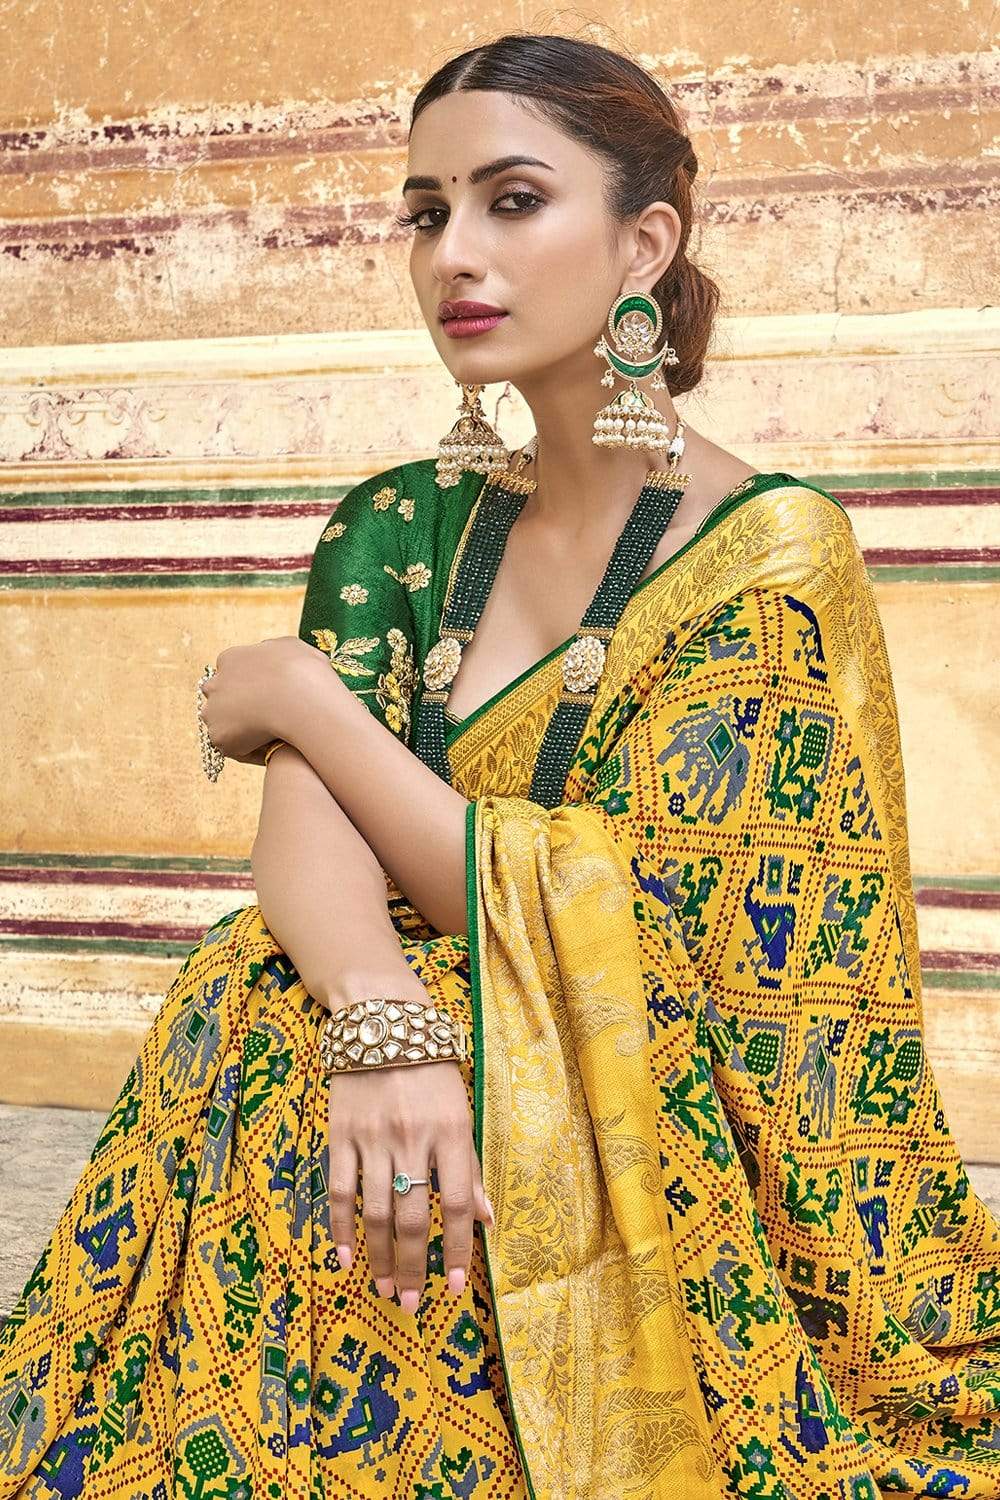 Patola Saree Lemon Green Woven Patola Saree With Banarasi Border And Designer Embroidered Blouse saree online